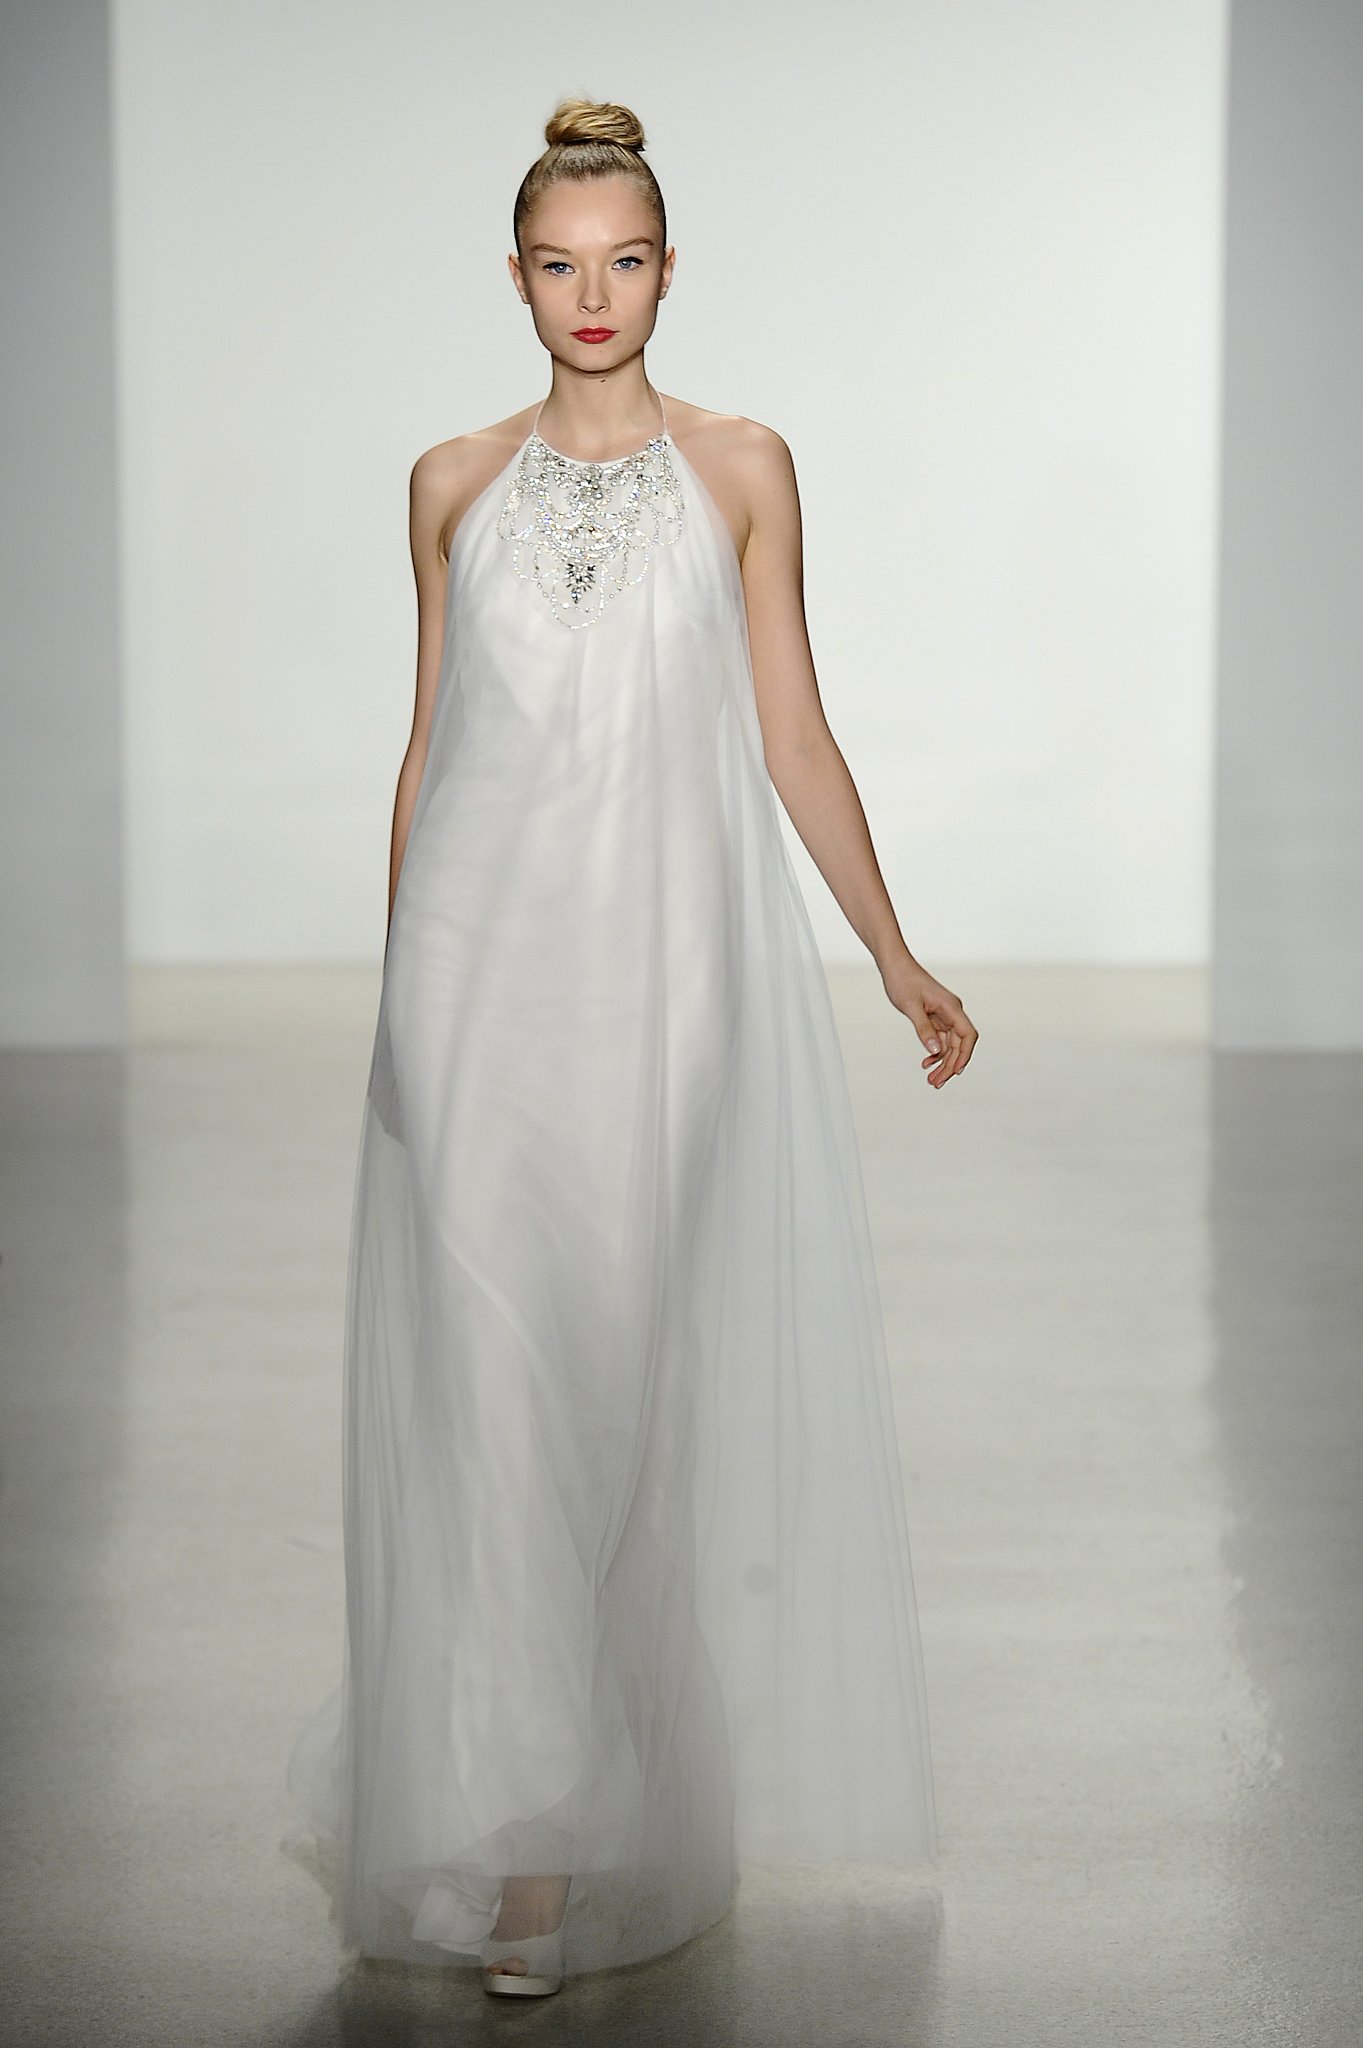 Kenneth Pool Bridal Fall 2014 | Weddings: Dream Dresses From Bridal ...